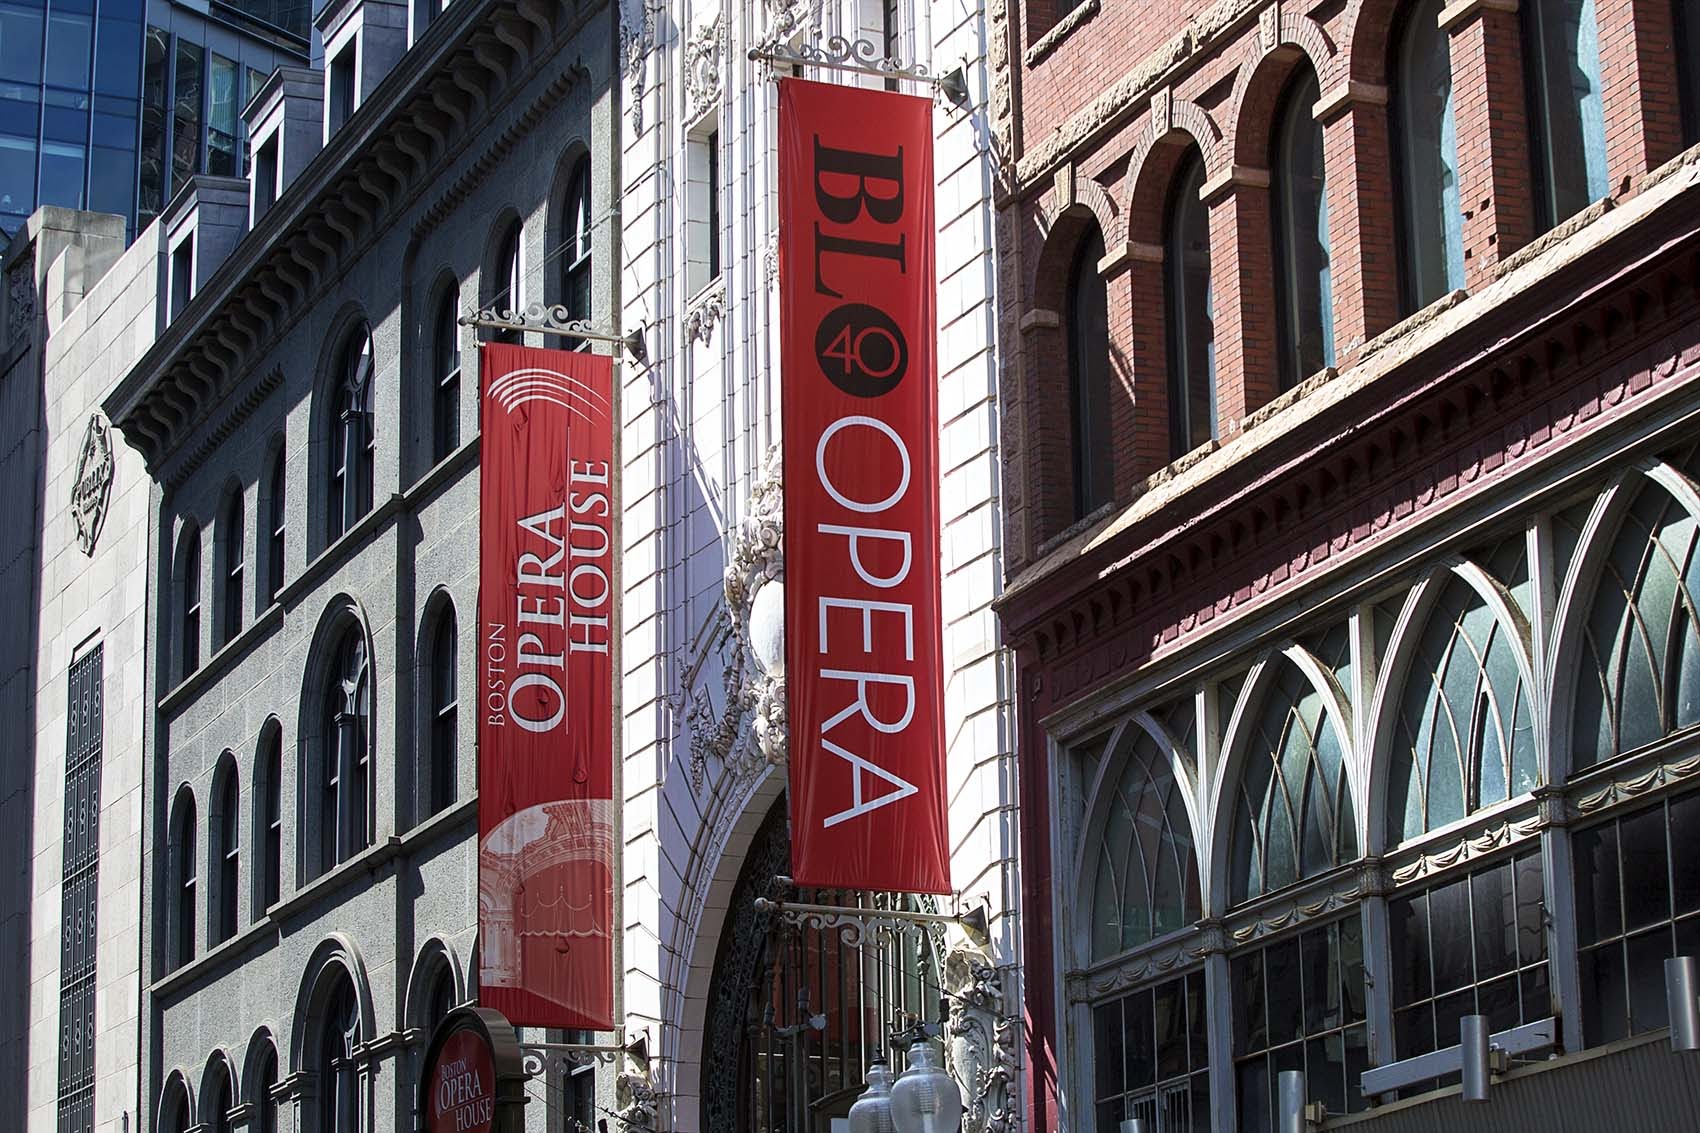 Banners for the Boston Lyric Opera hang outside the Boston Opera House last year. (Jesse Costa/WBUR)